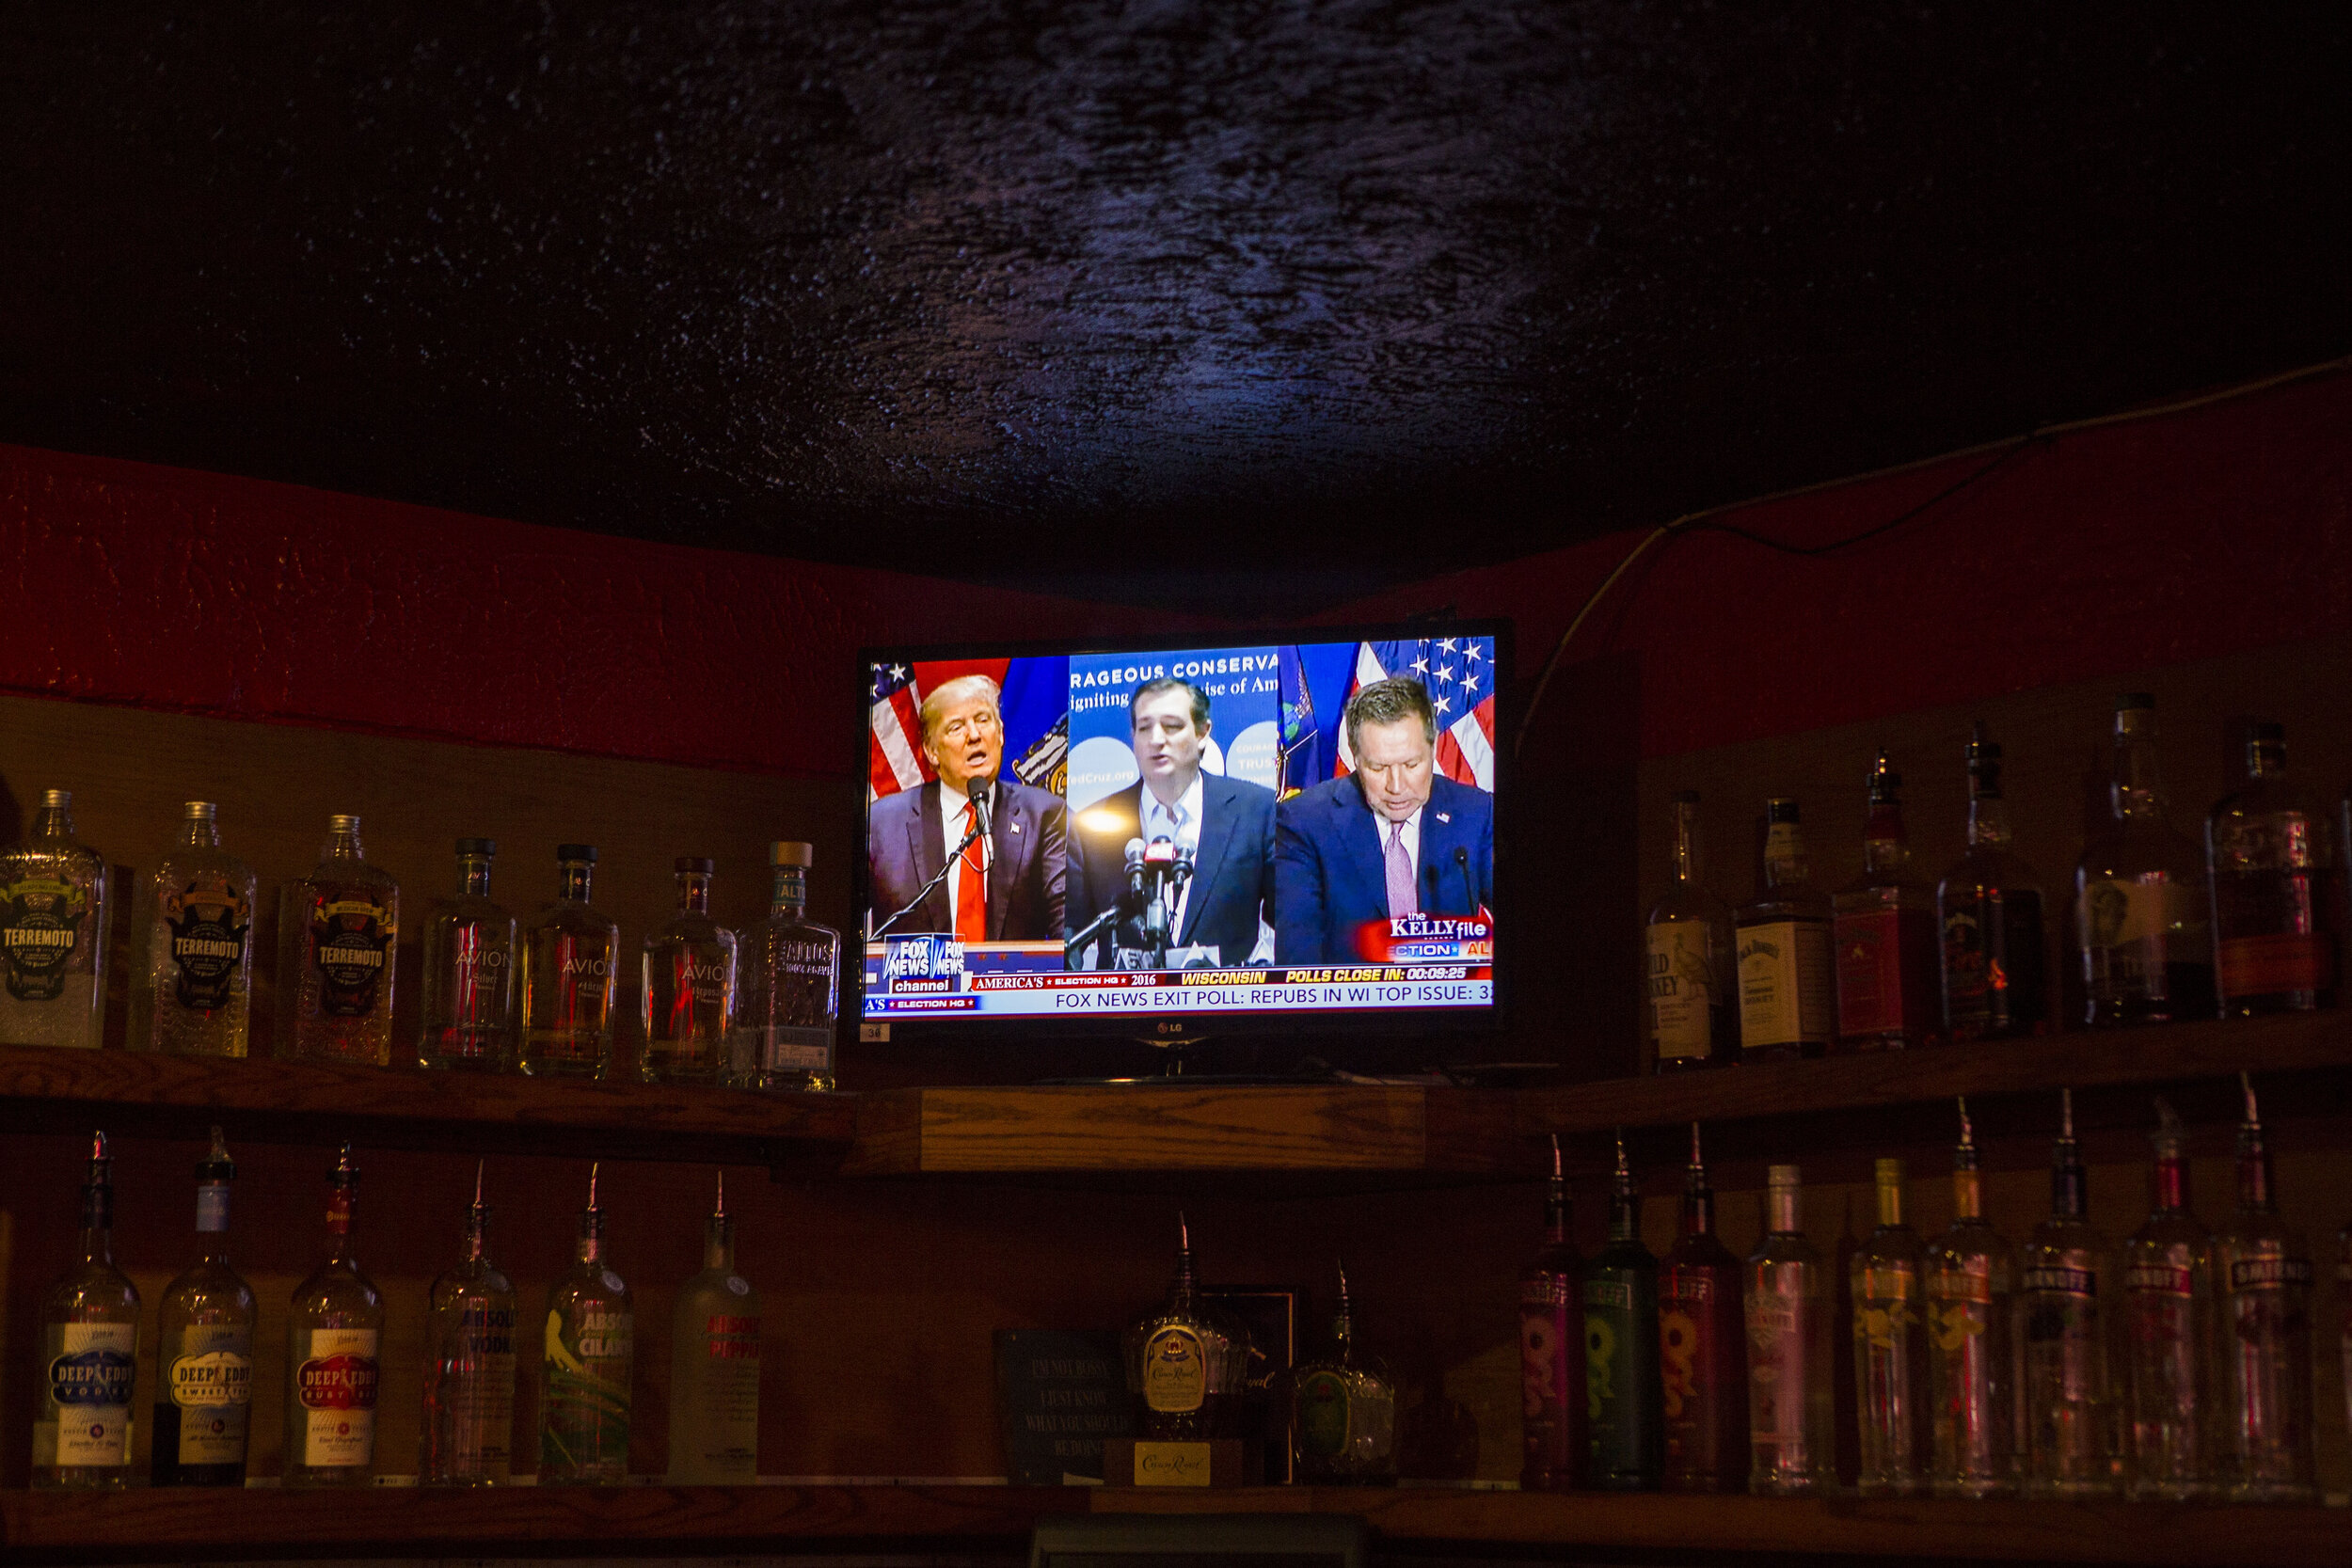  Election night at a local bar.  